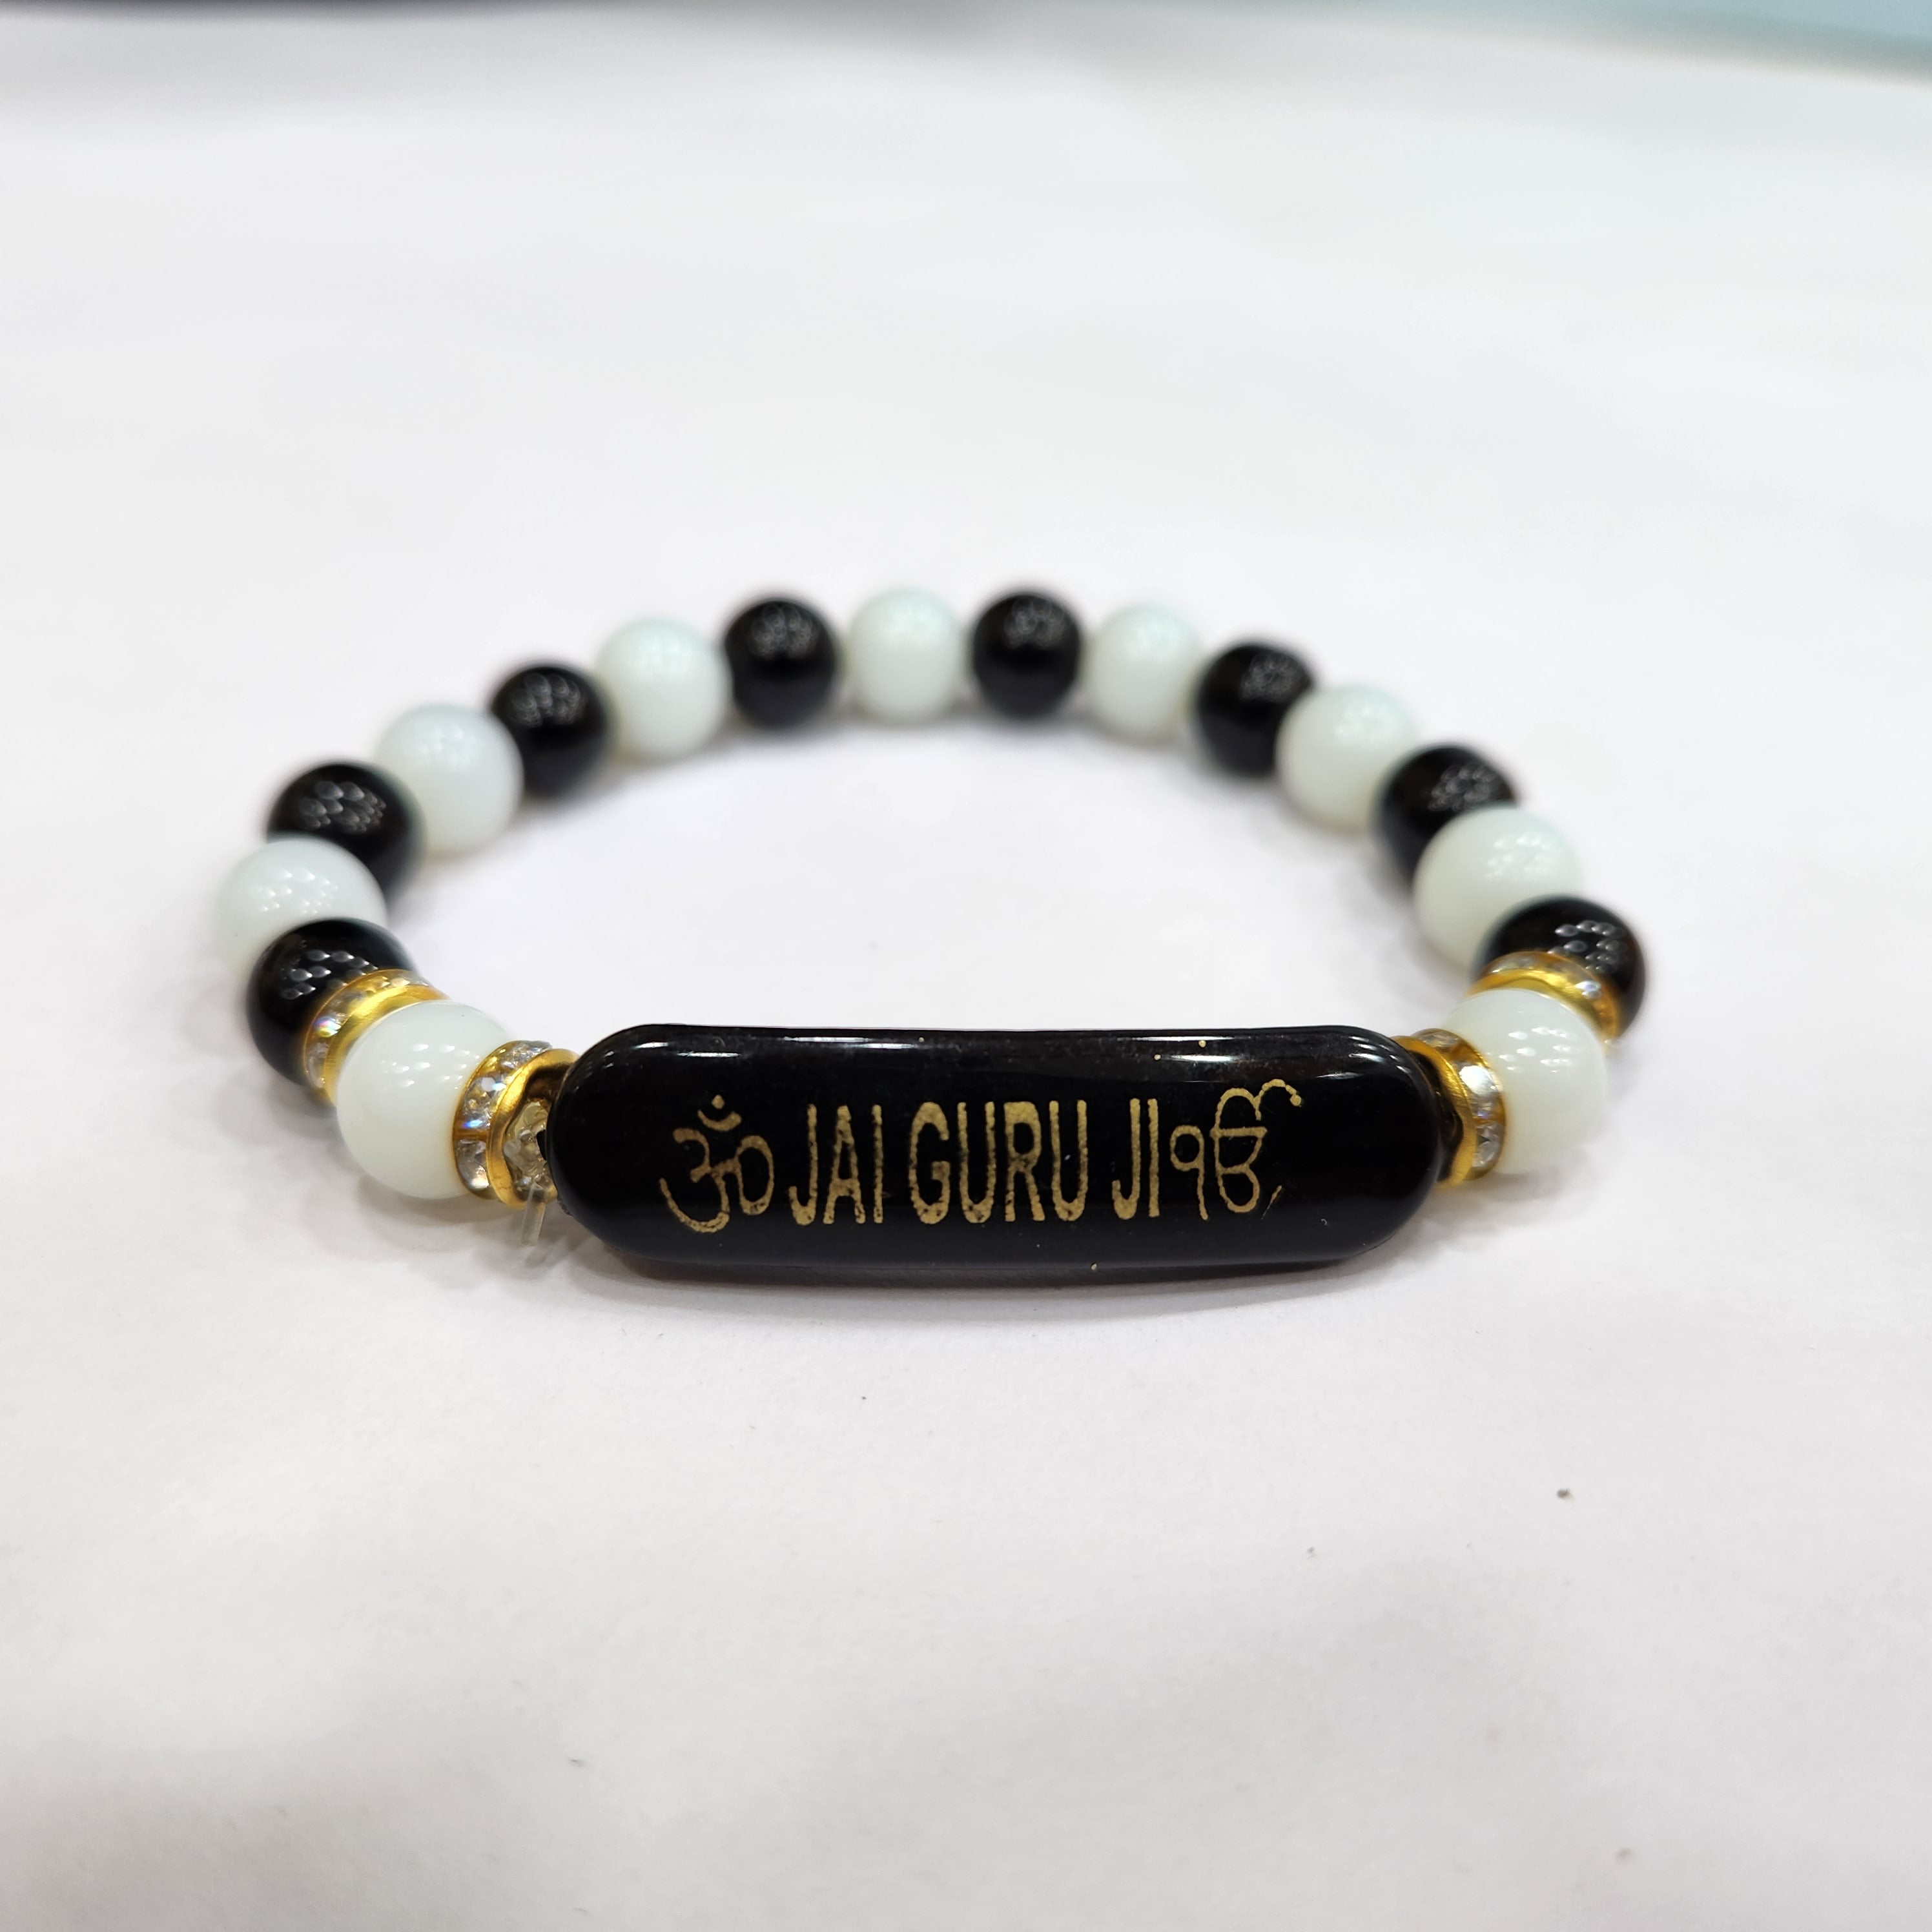 Buy Bracelet online from Jai Guru Ji